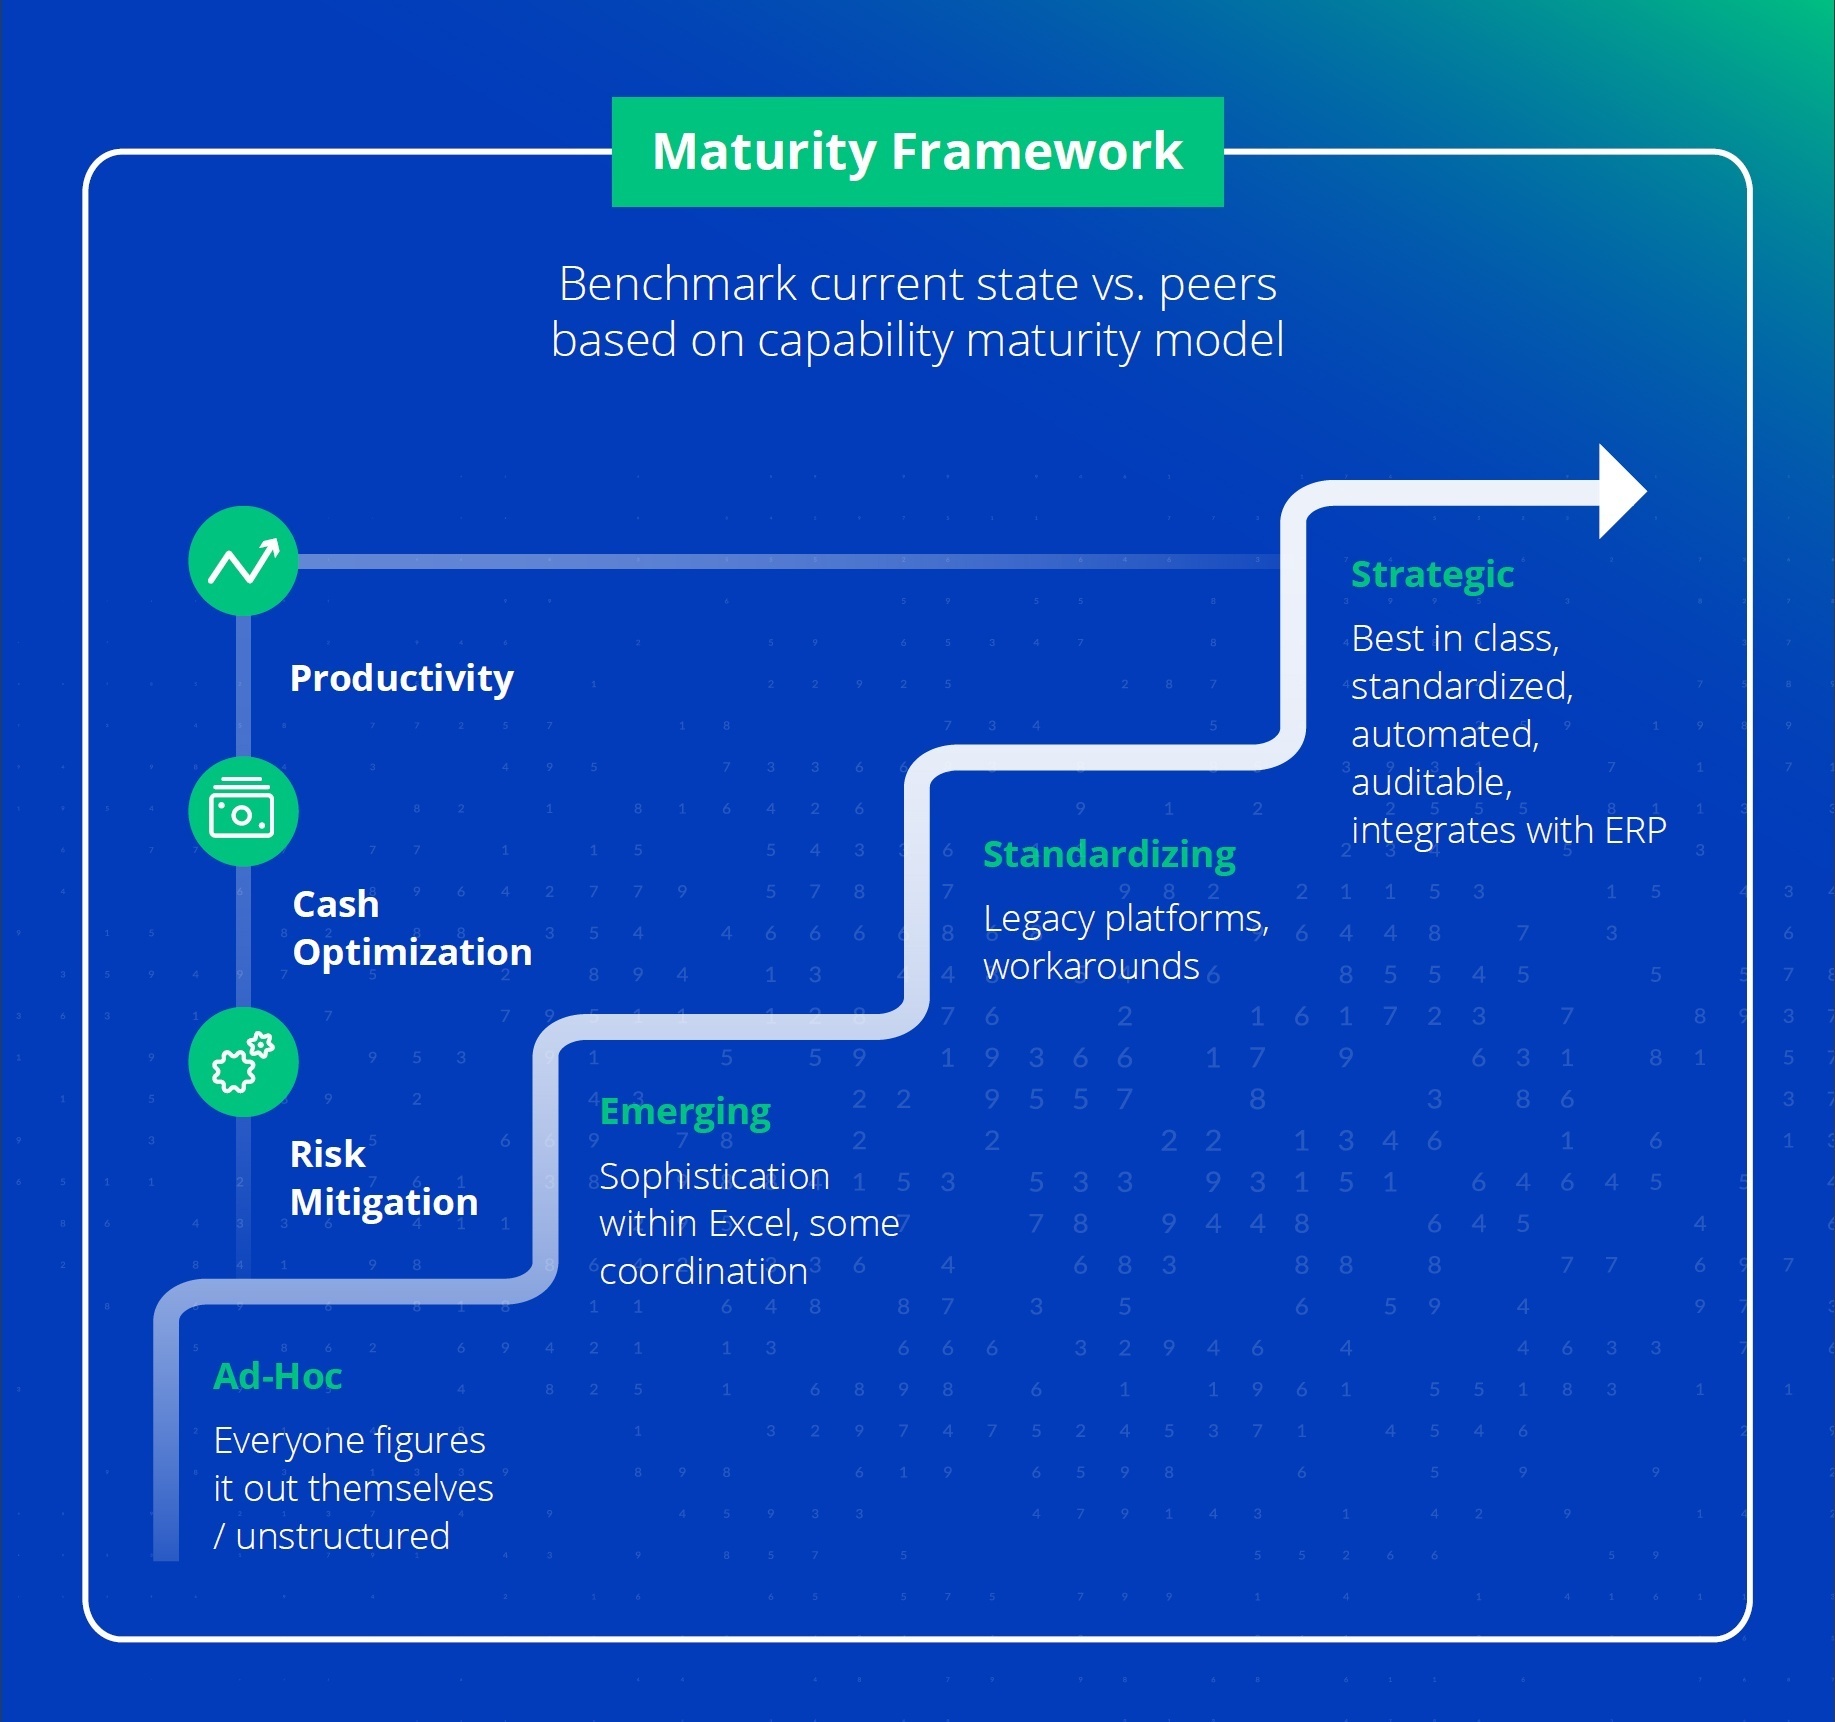 Kyriba Maturity Module for measuring digital treasury transformation